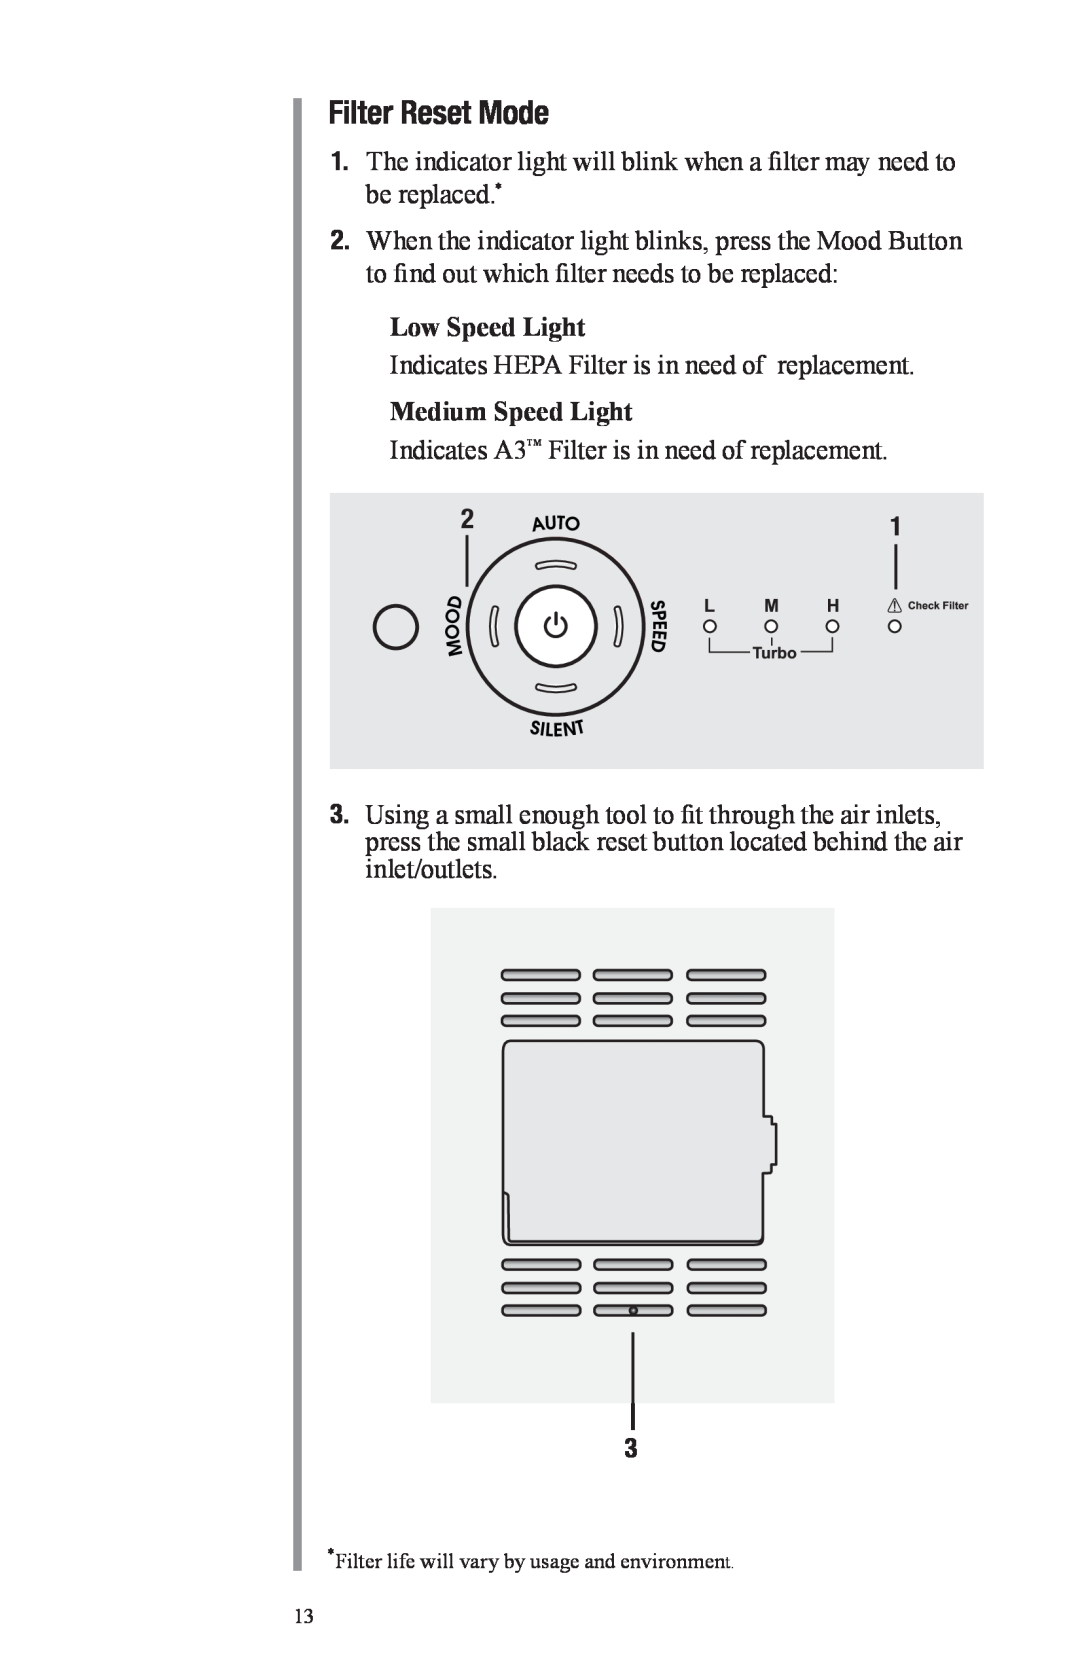 Oreck Air manual Filter Reset Mode, Low Speed Light, Medium Speed Light 